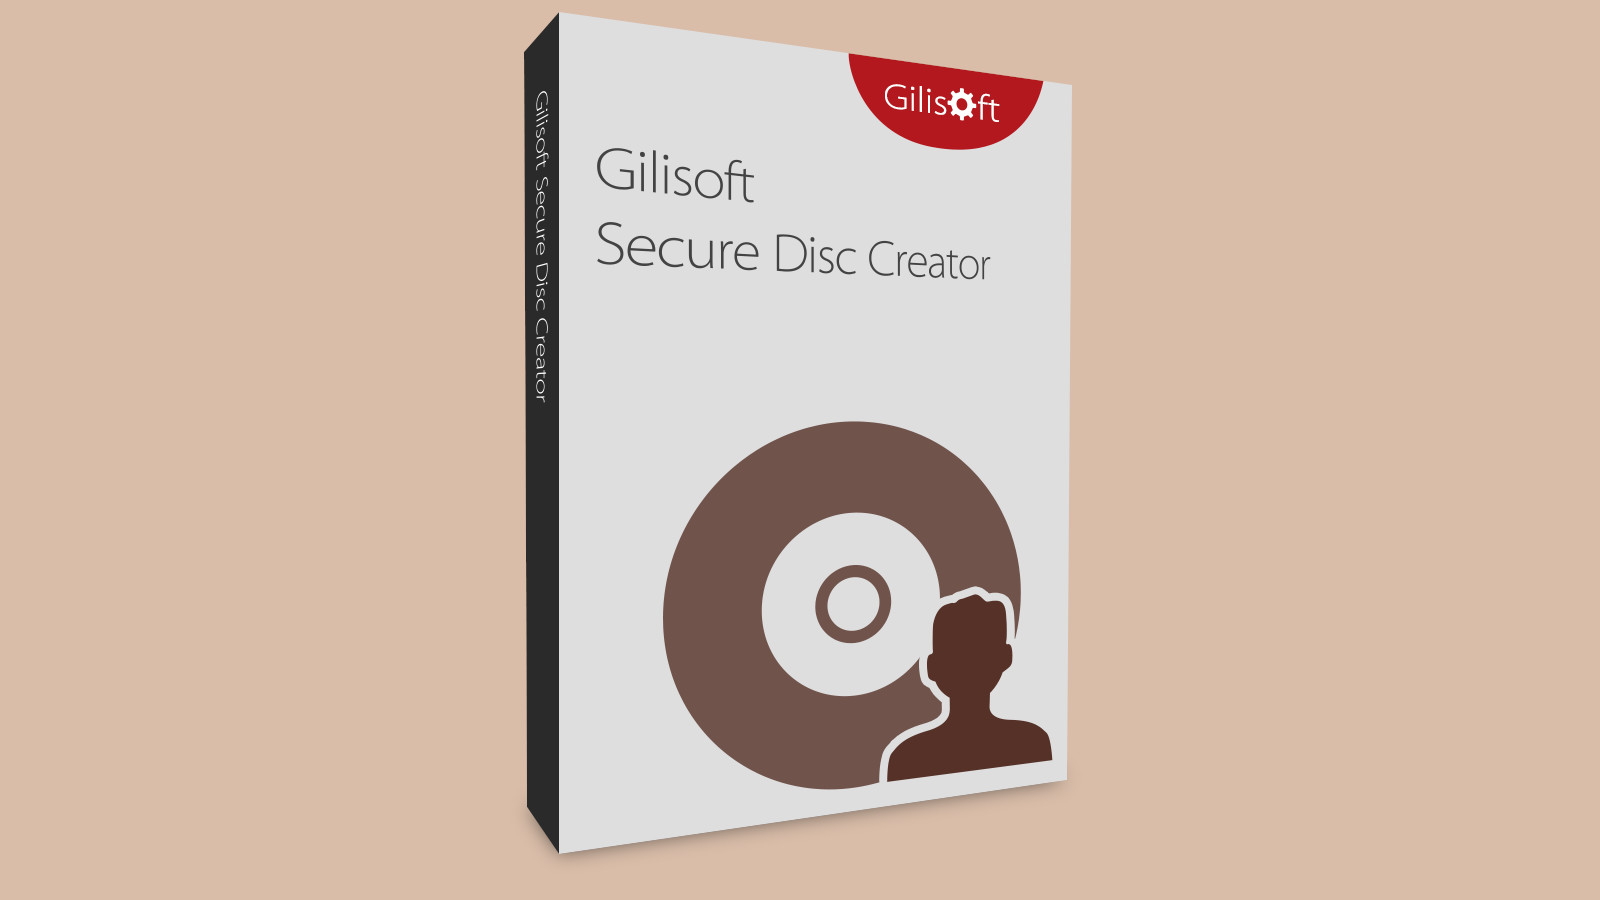 Gilisoft Secure Disc Creator CD Key, 6.84$